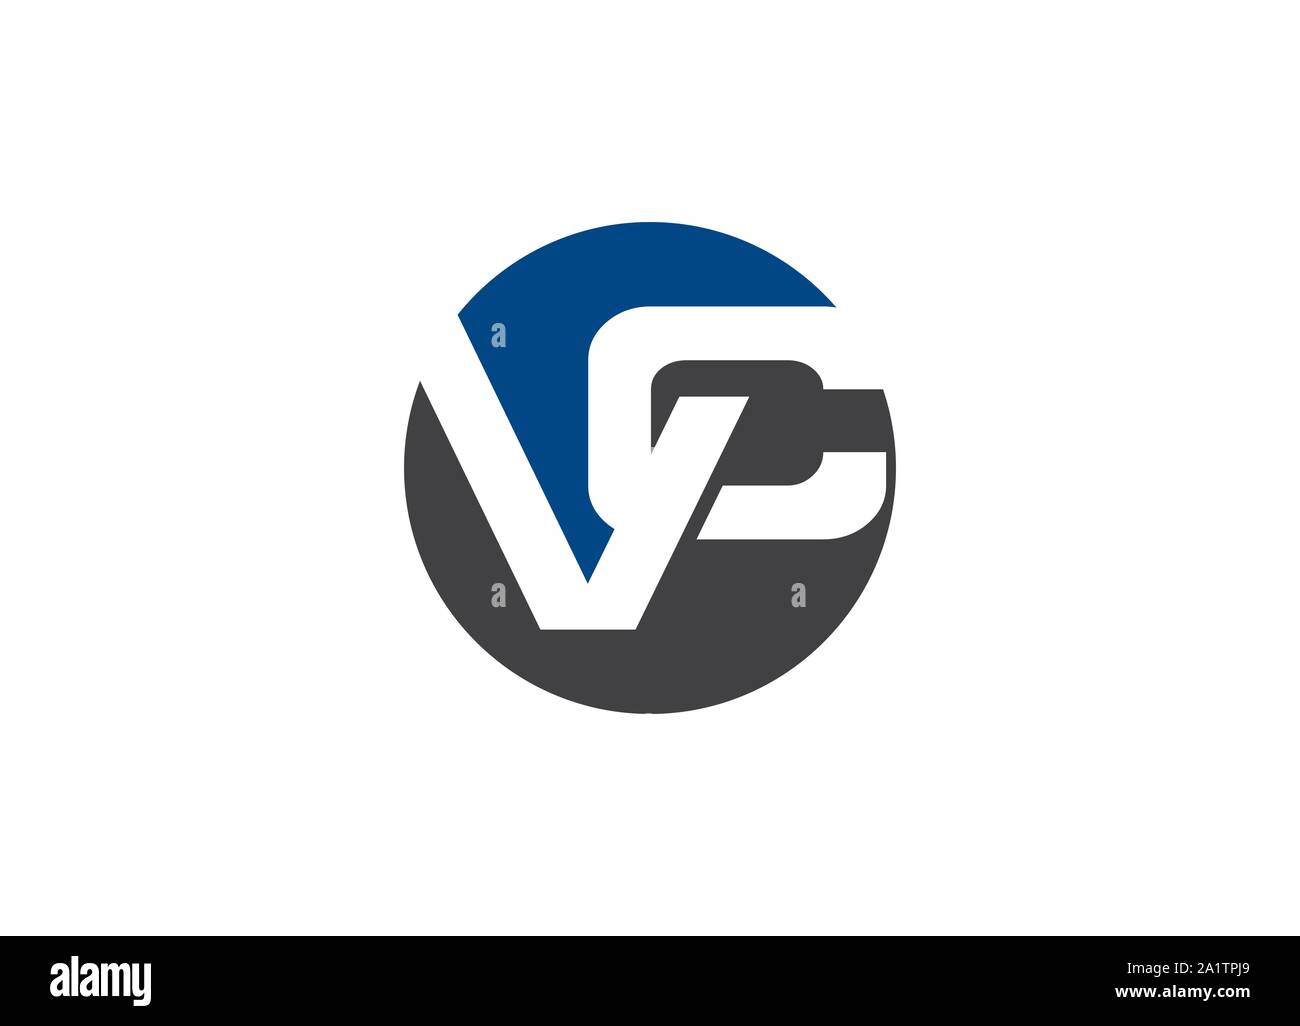 Vc Logo Images